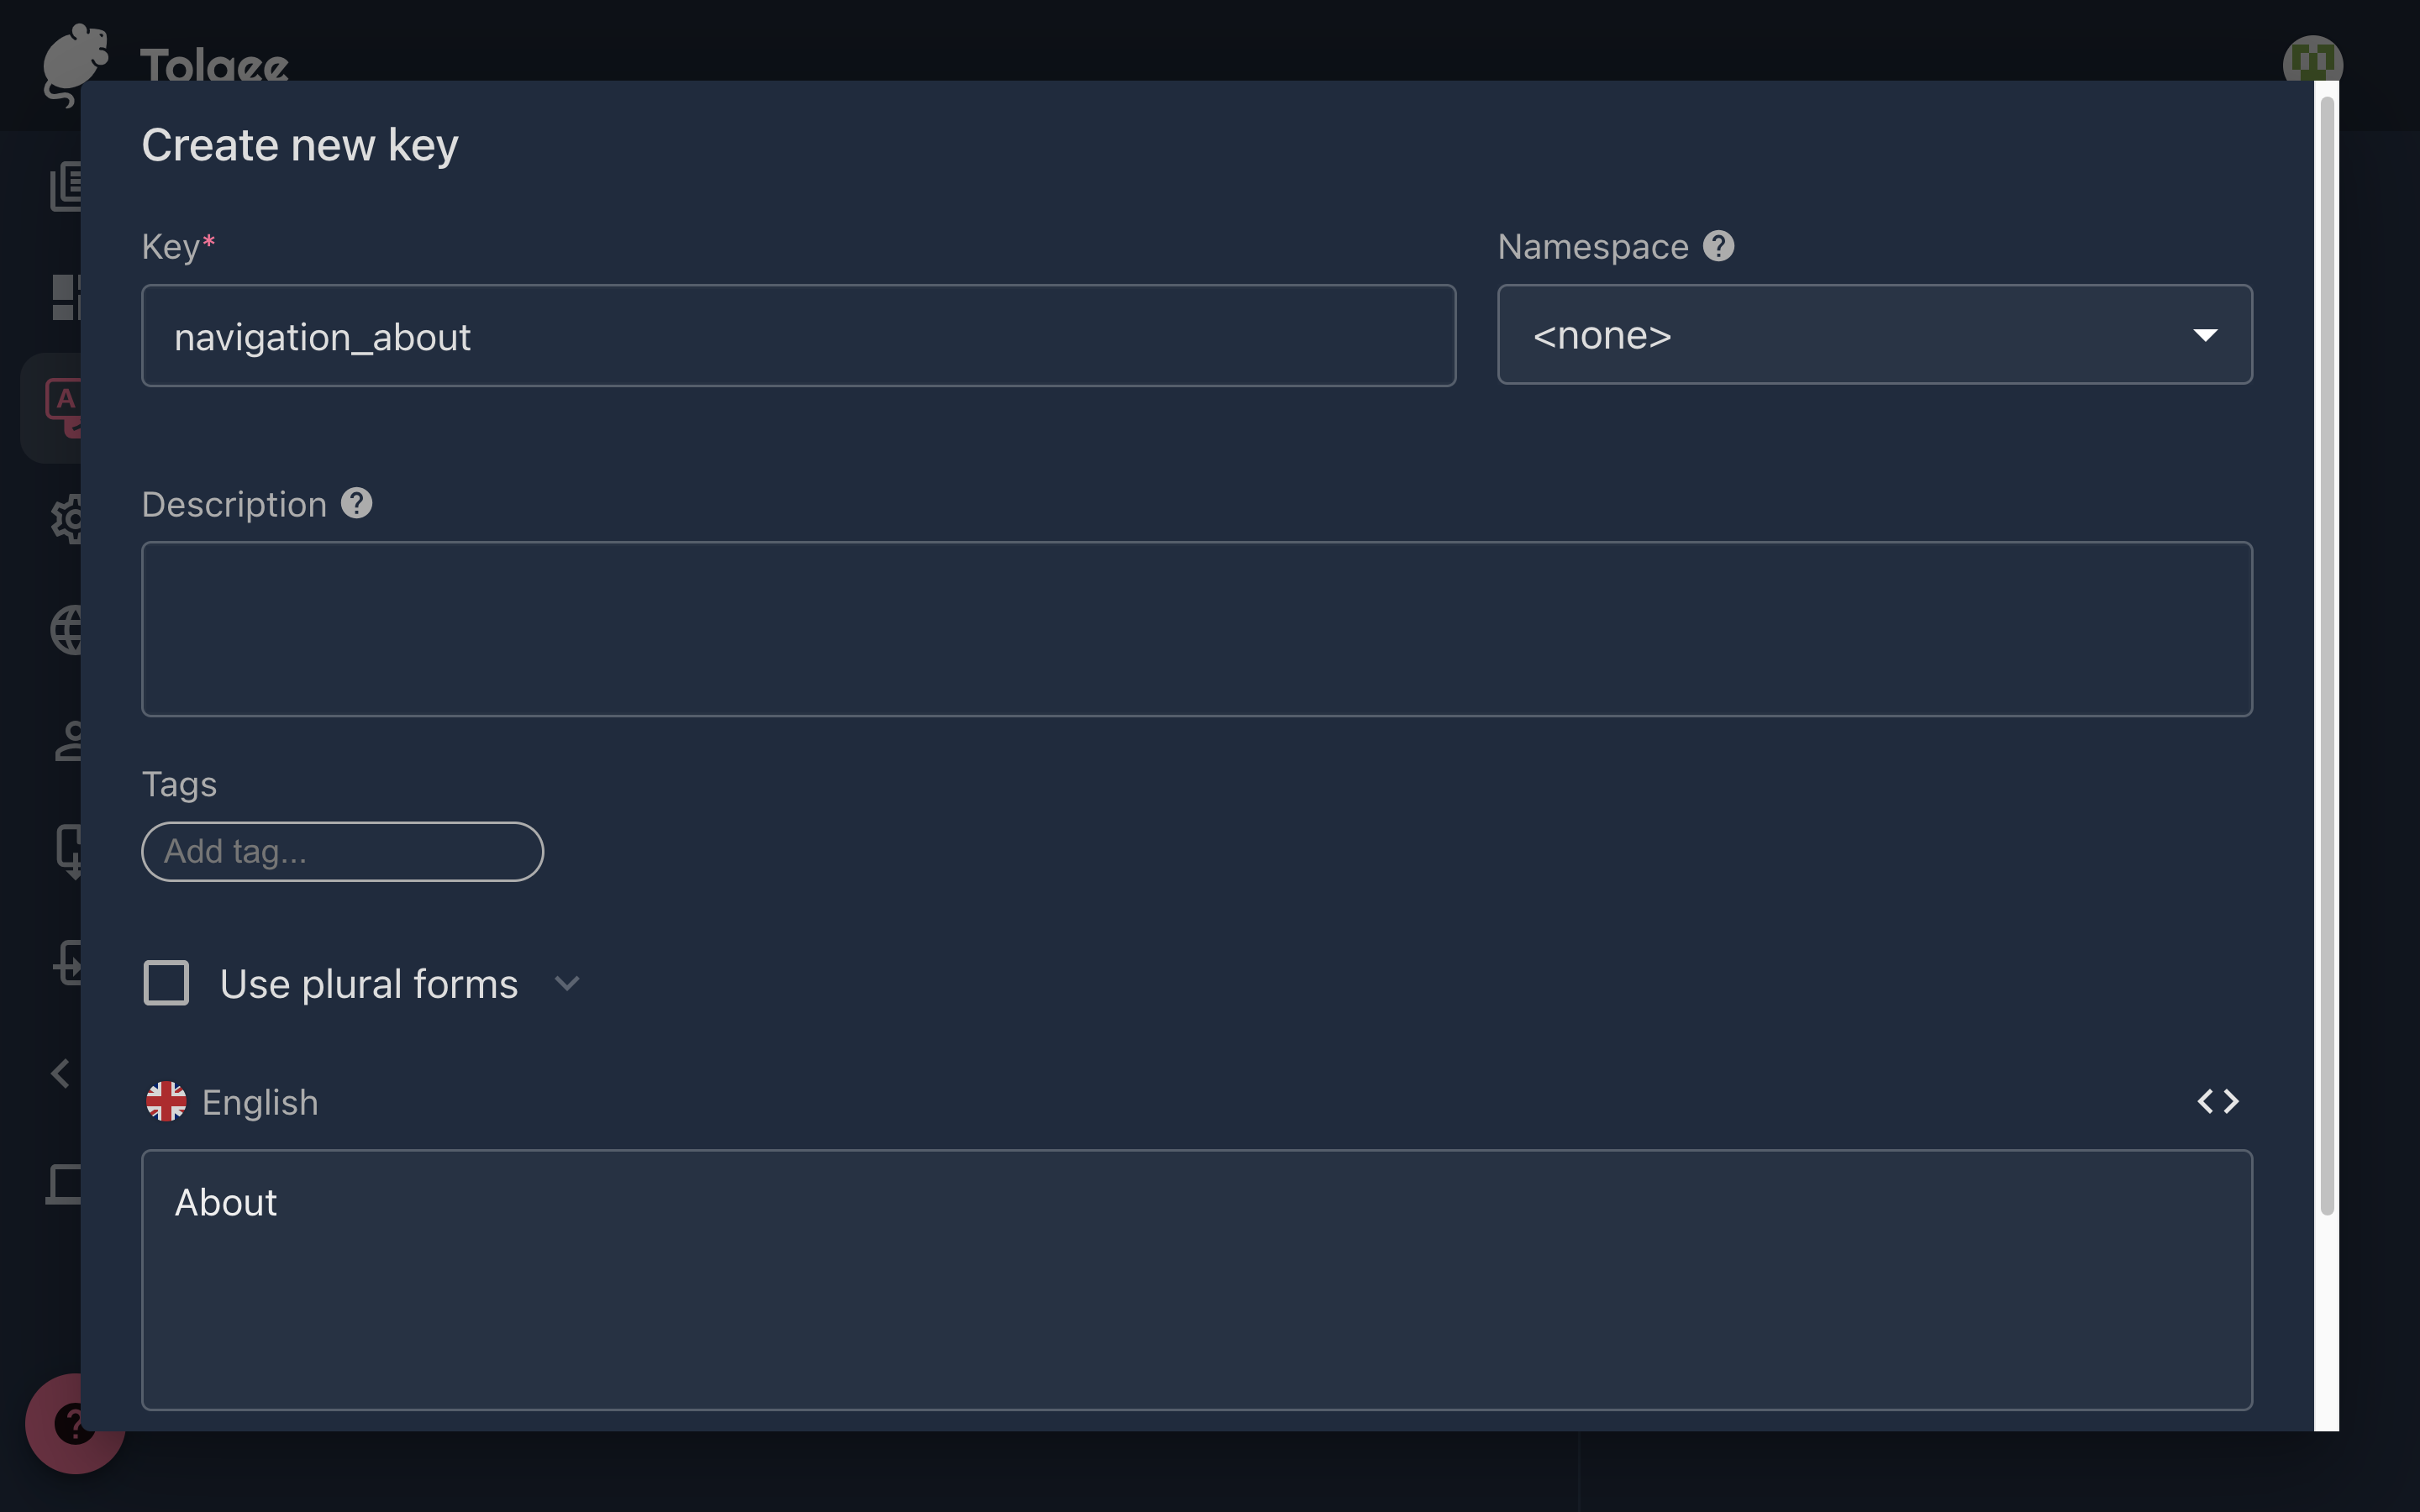 Screenshot of the Create new key window on the Tolgee platform